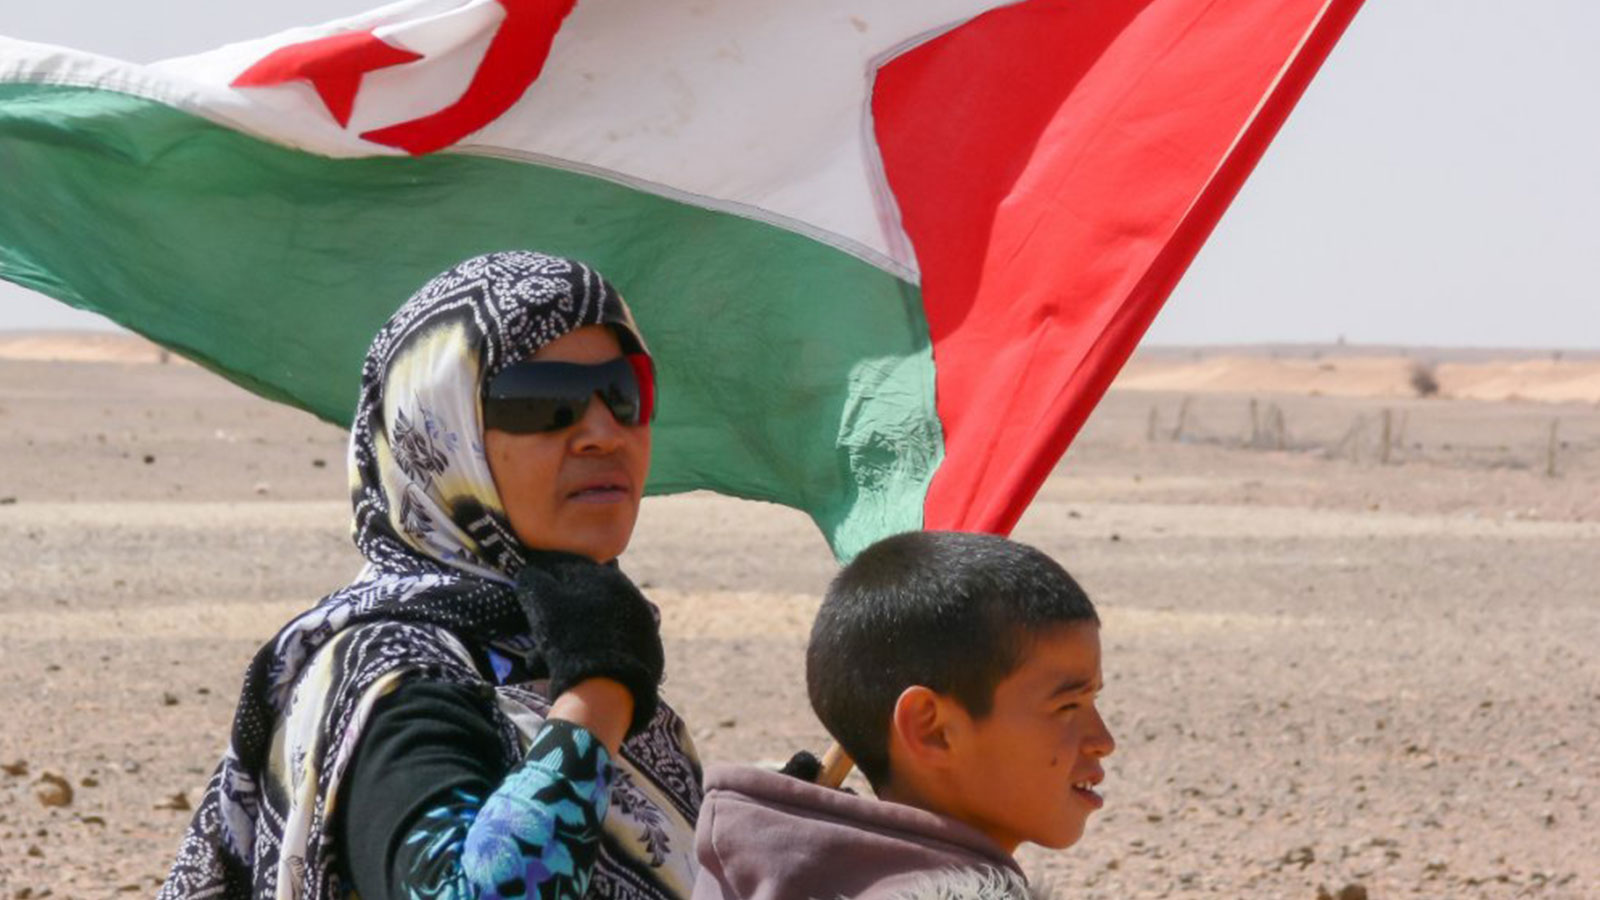 How Sahrawis see the Western Sahara conflict